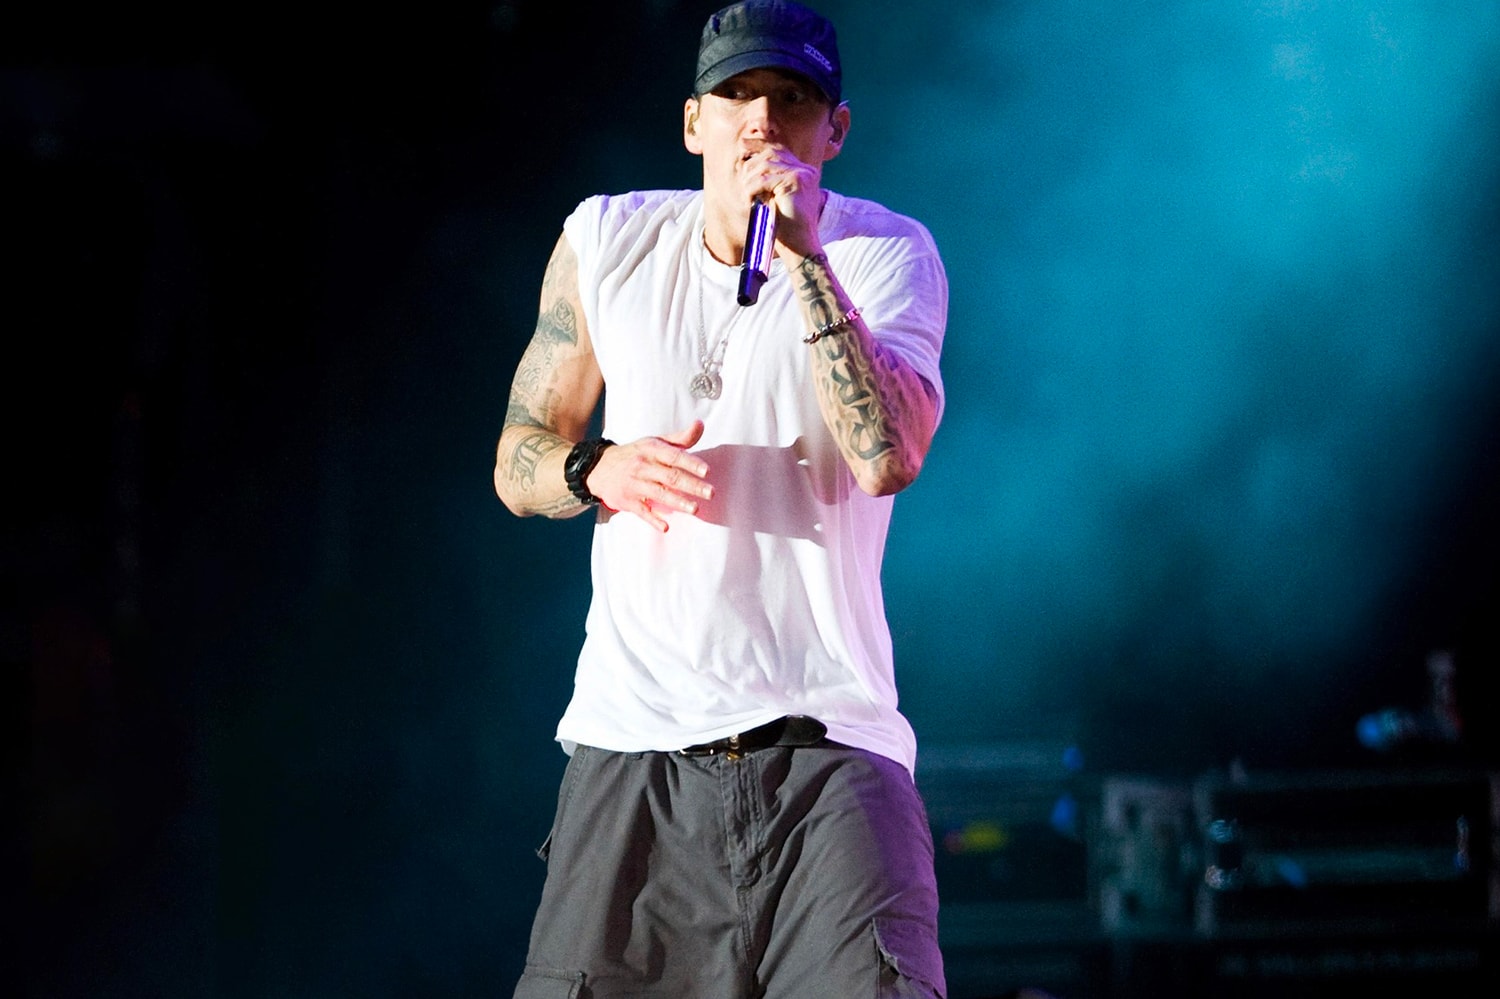 Eminem Breaks World Record With "Godzilla" Verse juice wrld collab 229 words 30 seconds 